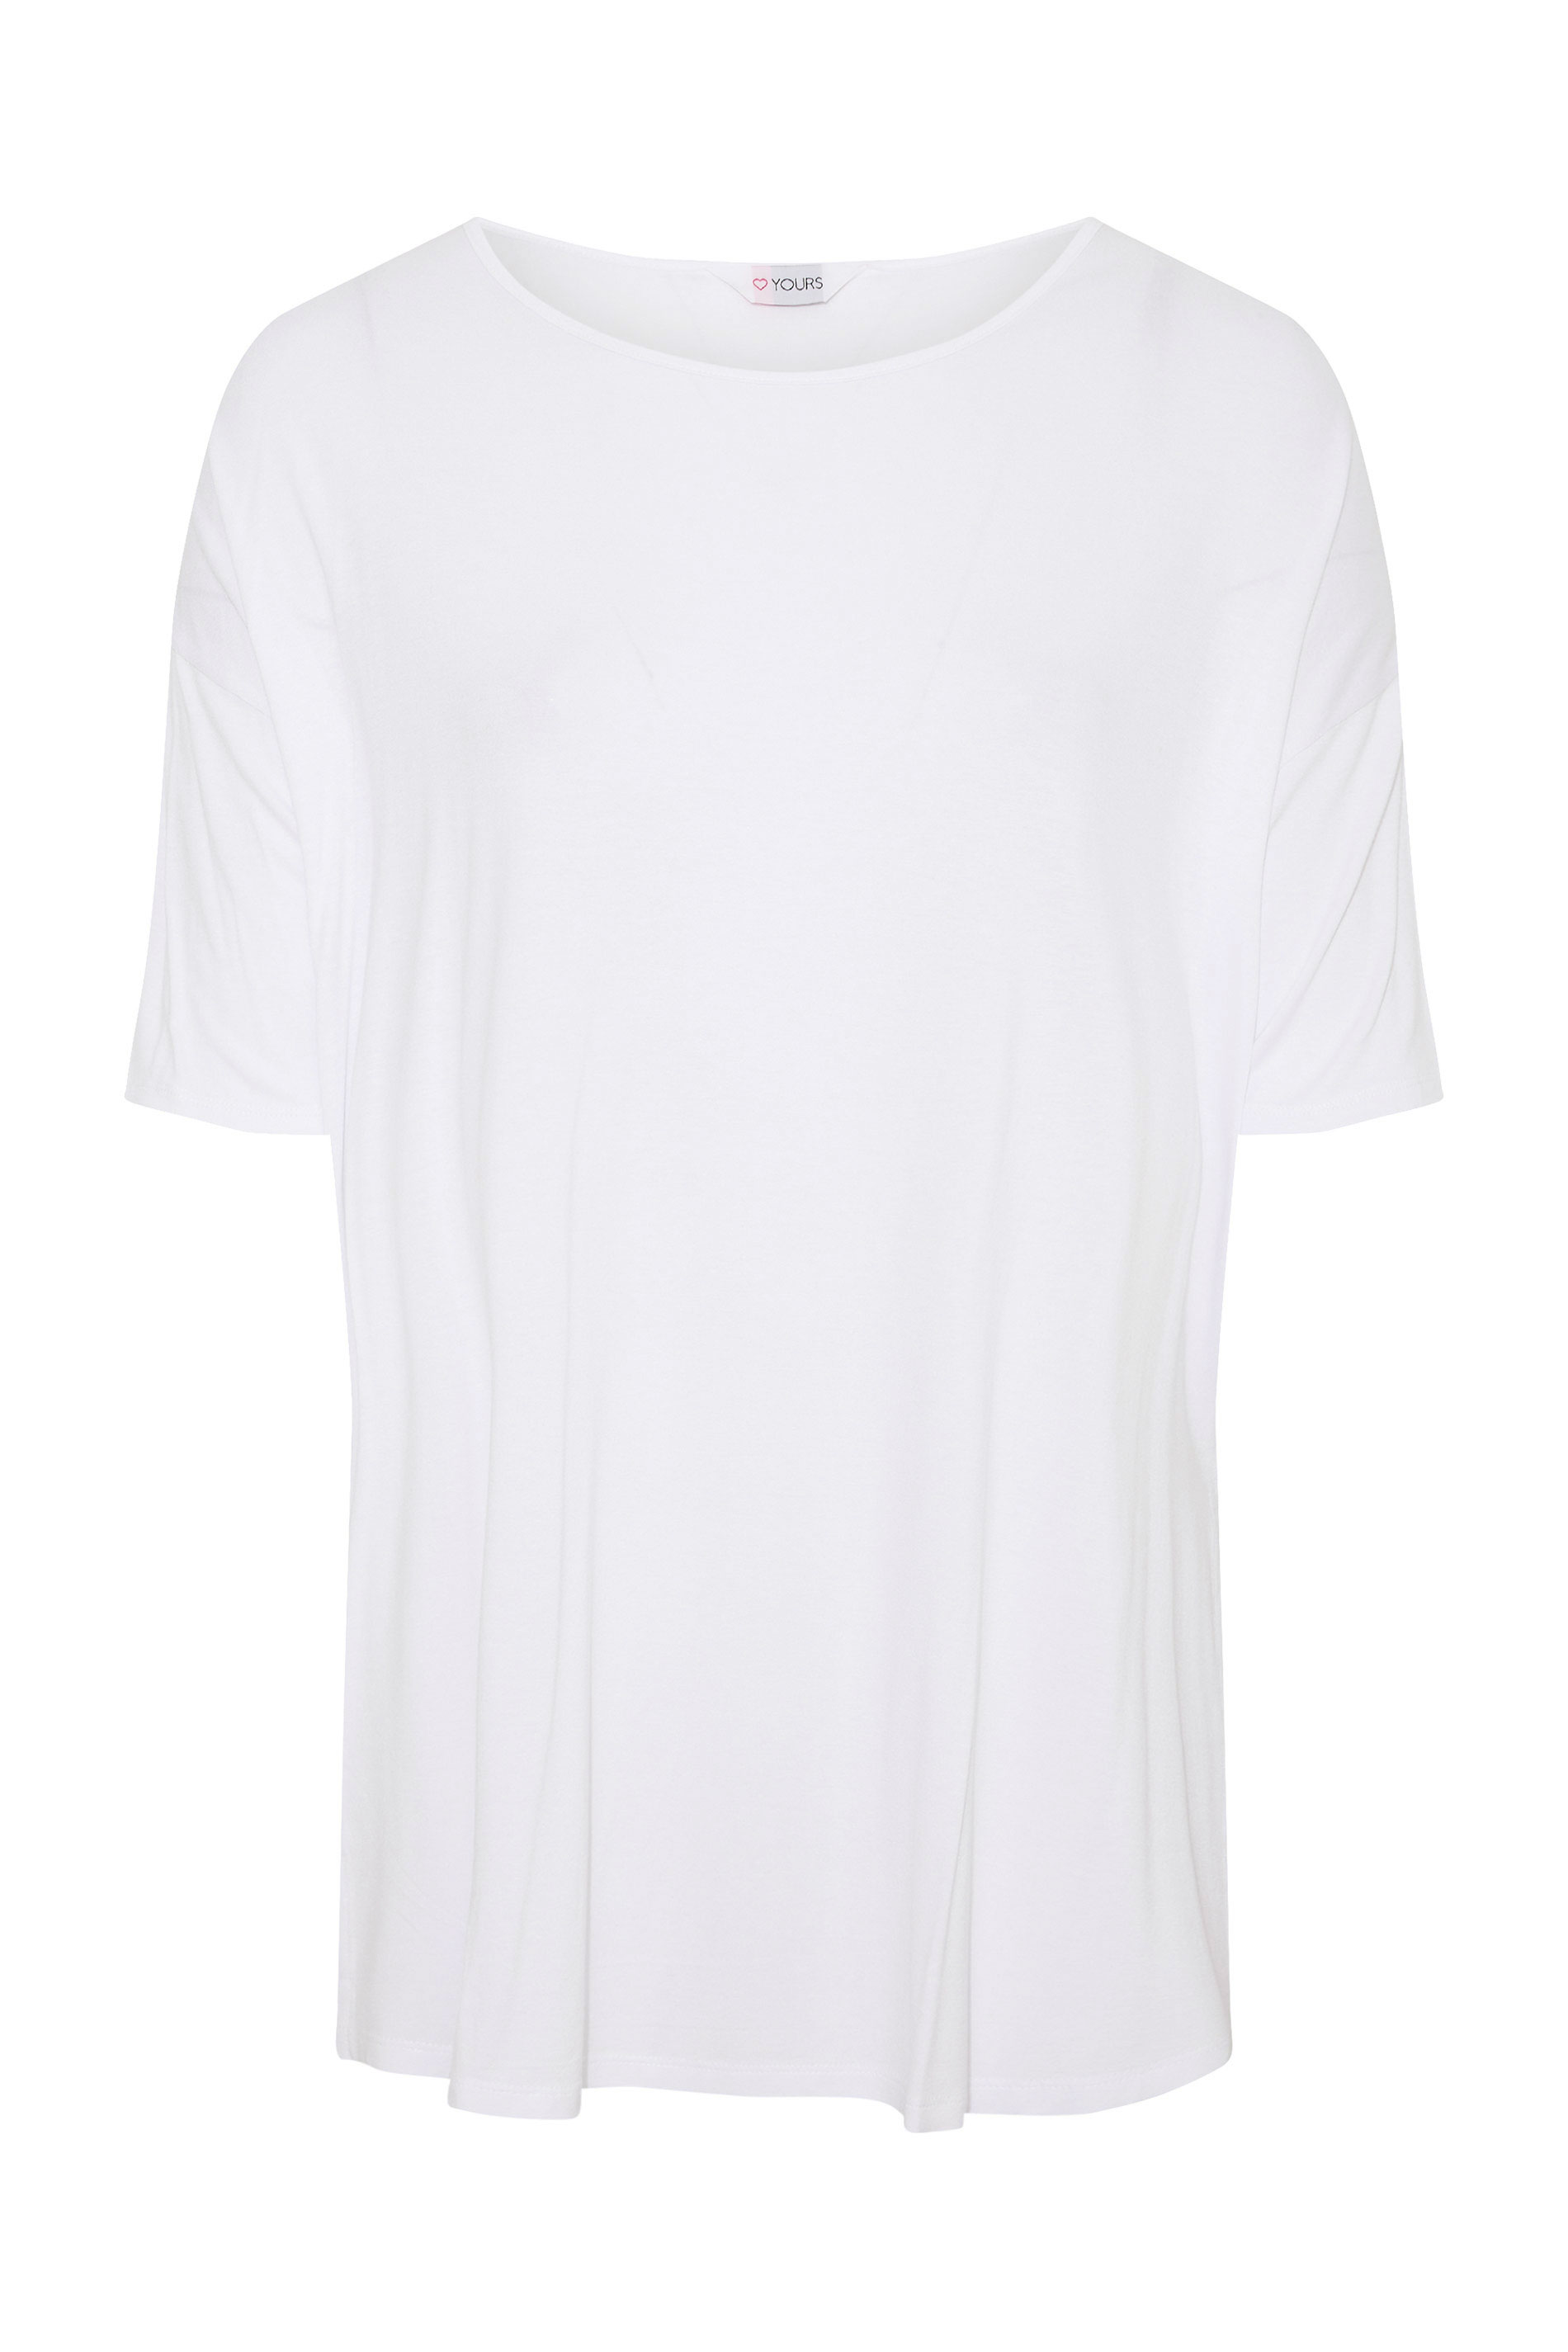 Grande taille  Tops Grande taille  T-Shirts | T-Shirt Blanc Oversize Long en Jersey - UZ76188